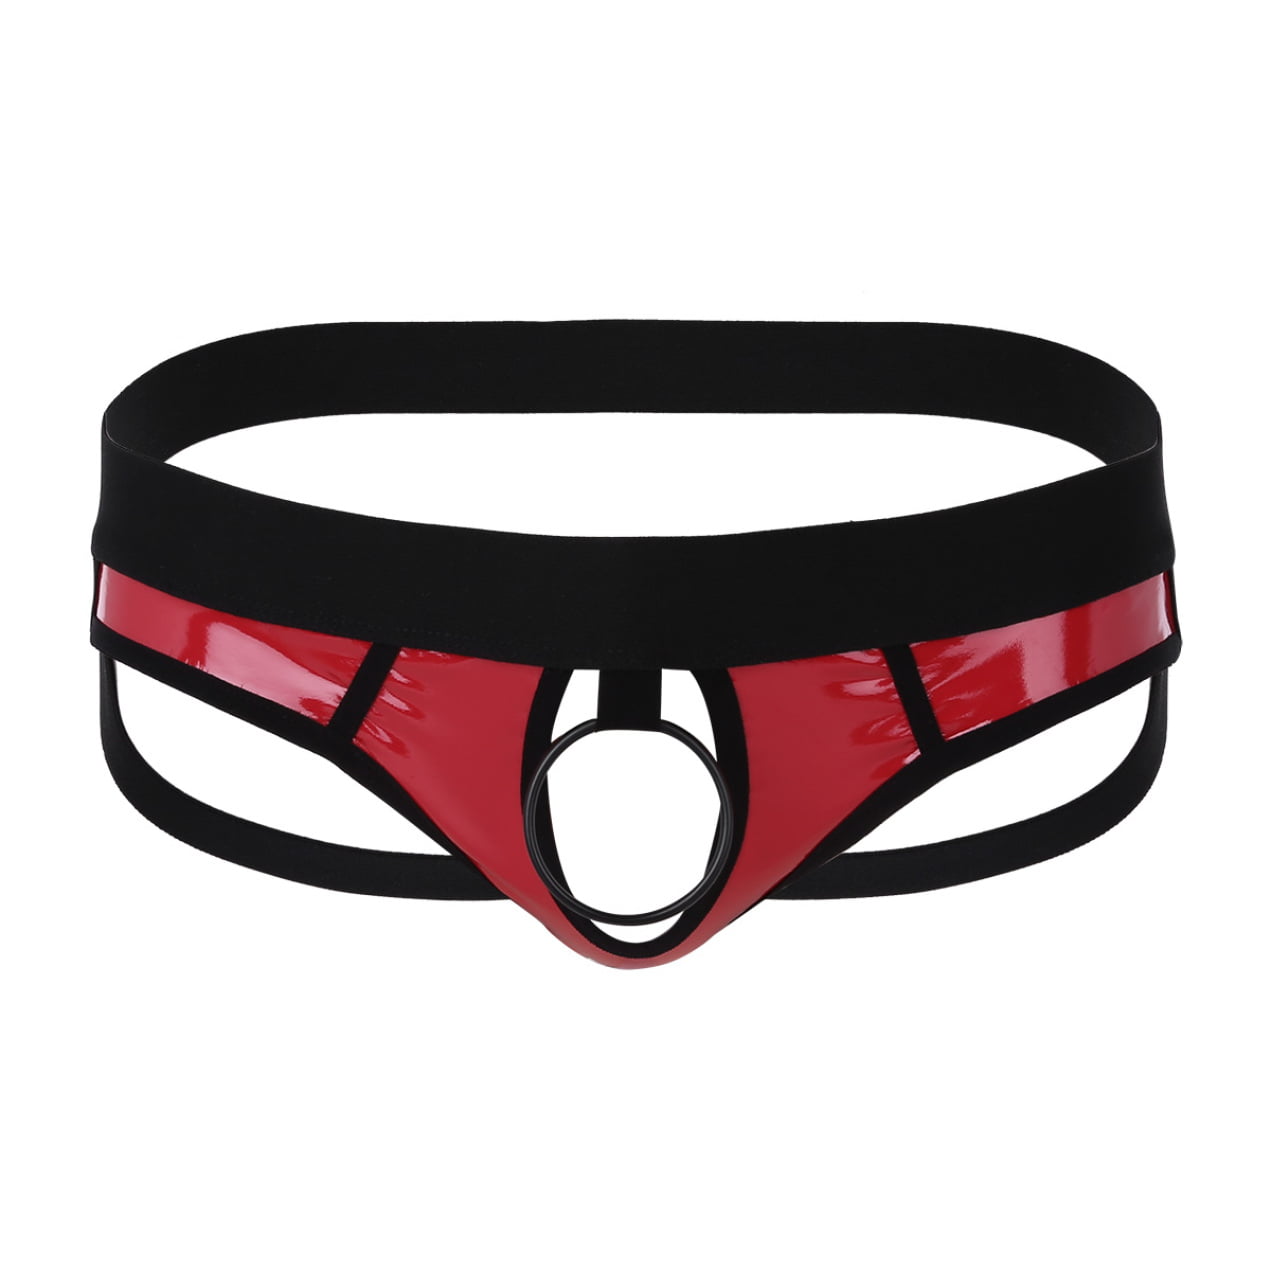 Men's Leather Jockstrap Underwear T-Back G-String Briefs Thong Shorts Red 